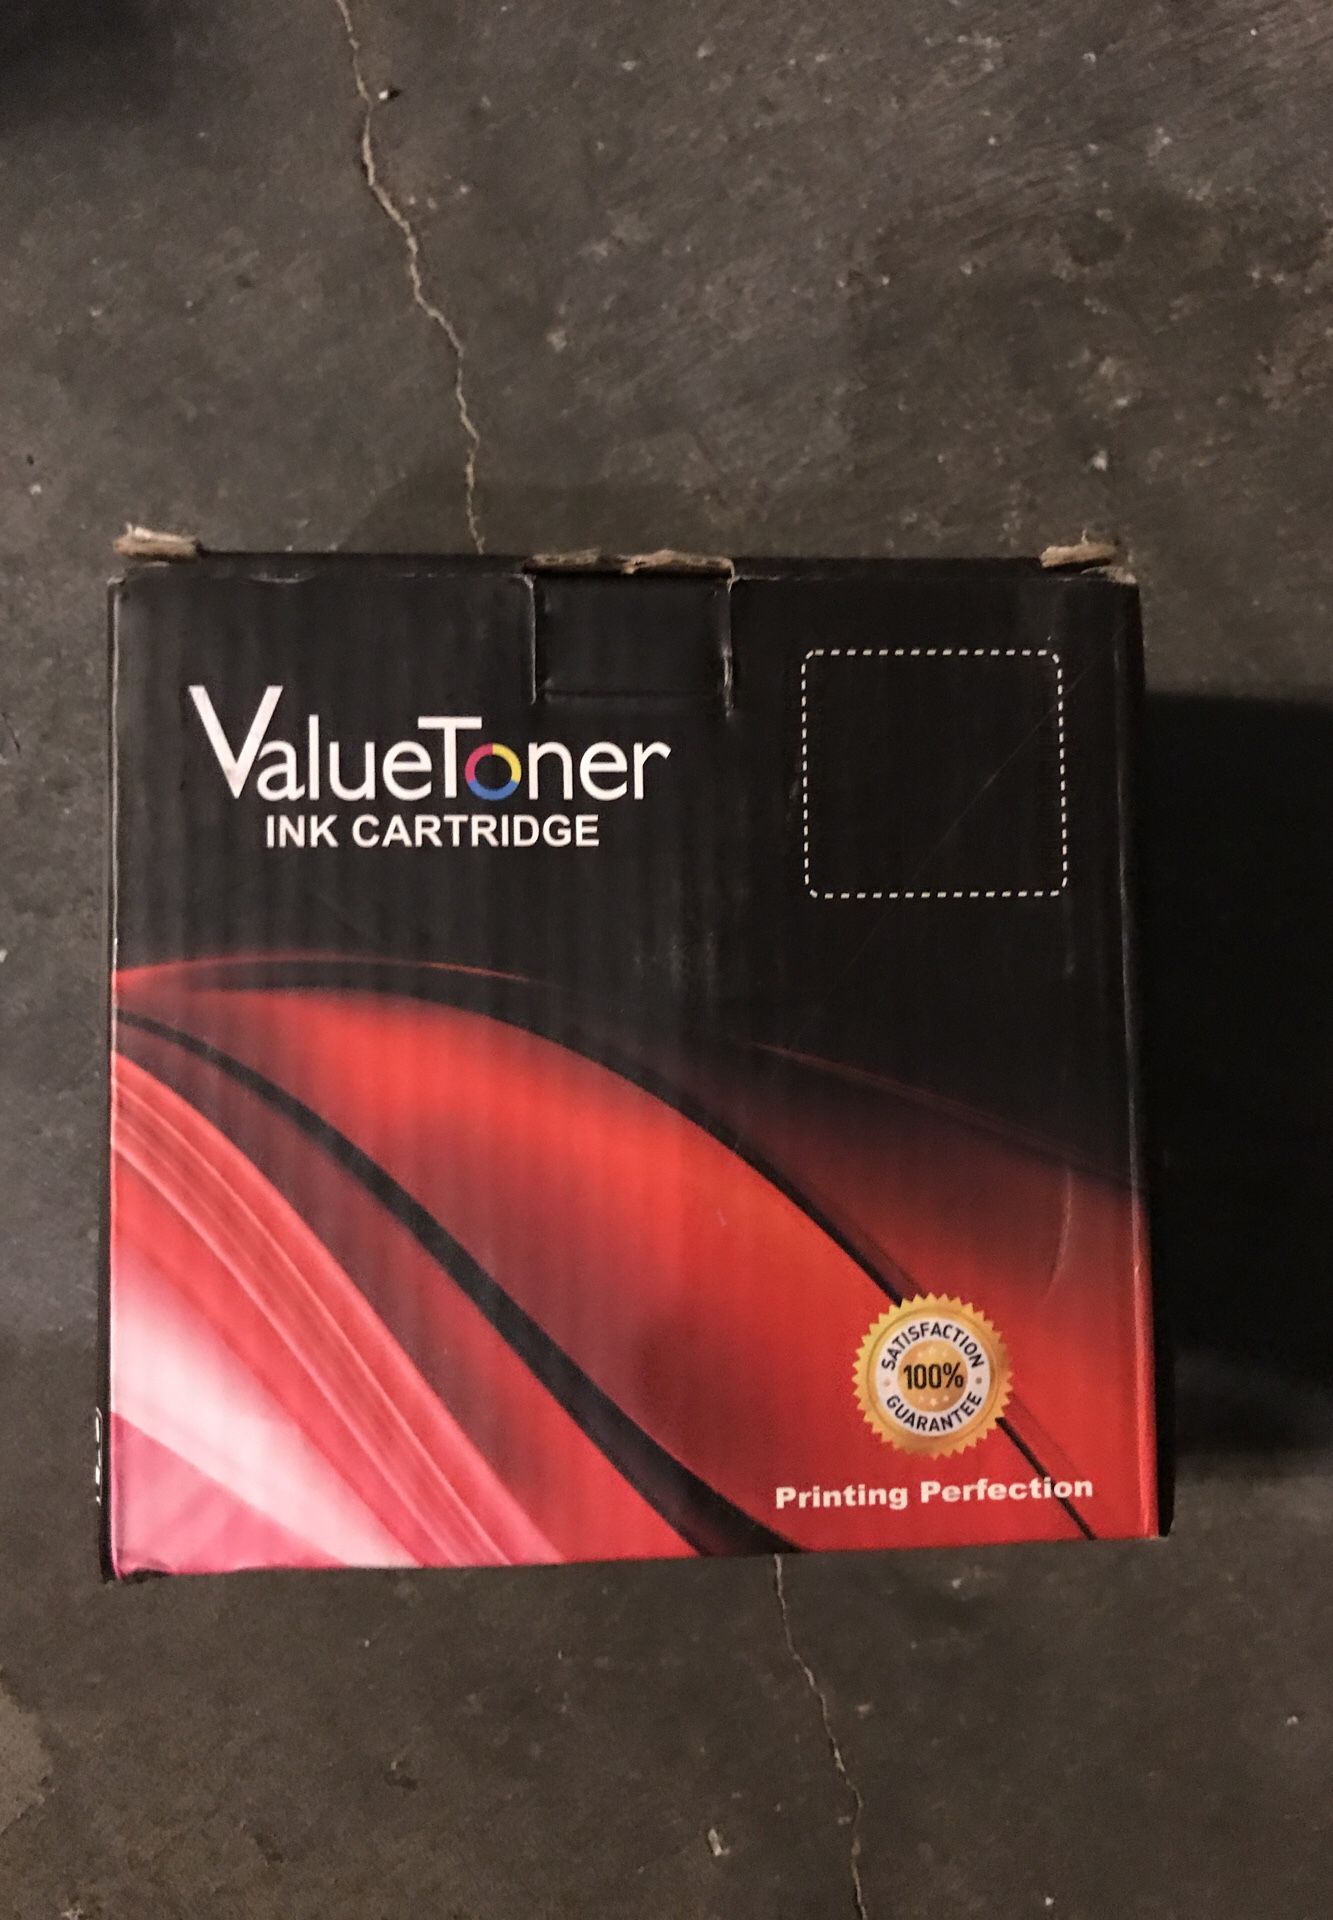 Value toner ink cartridge